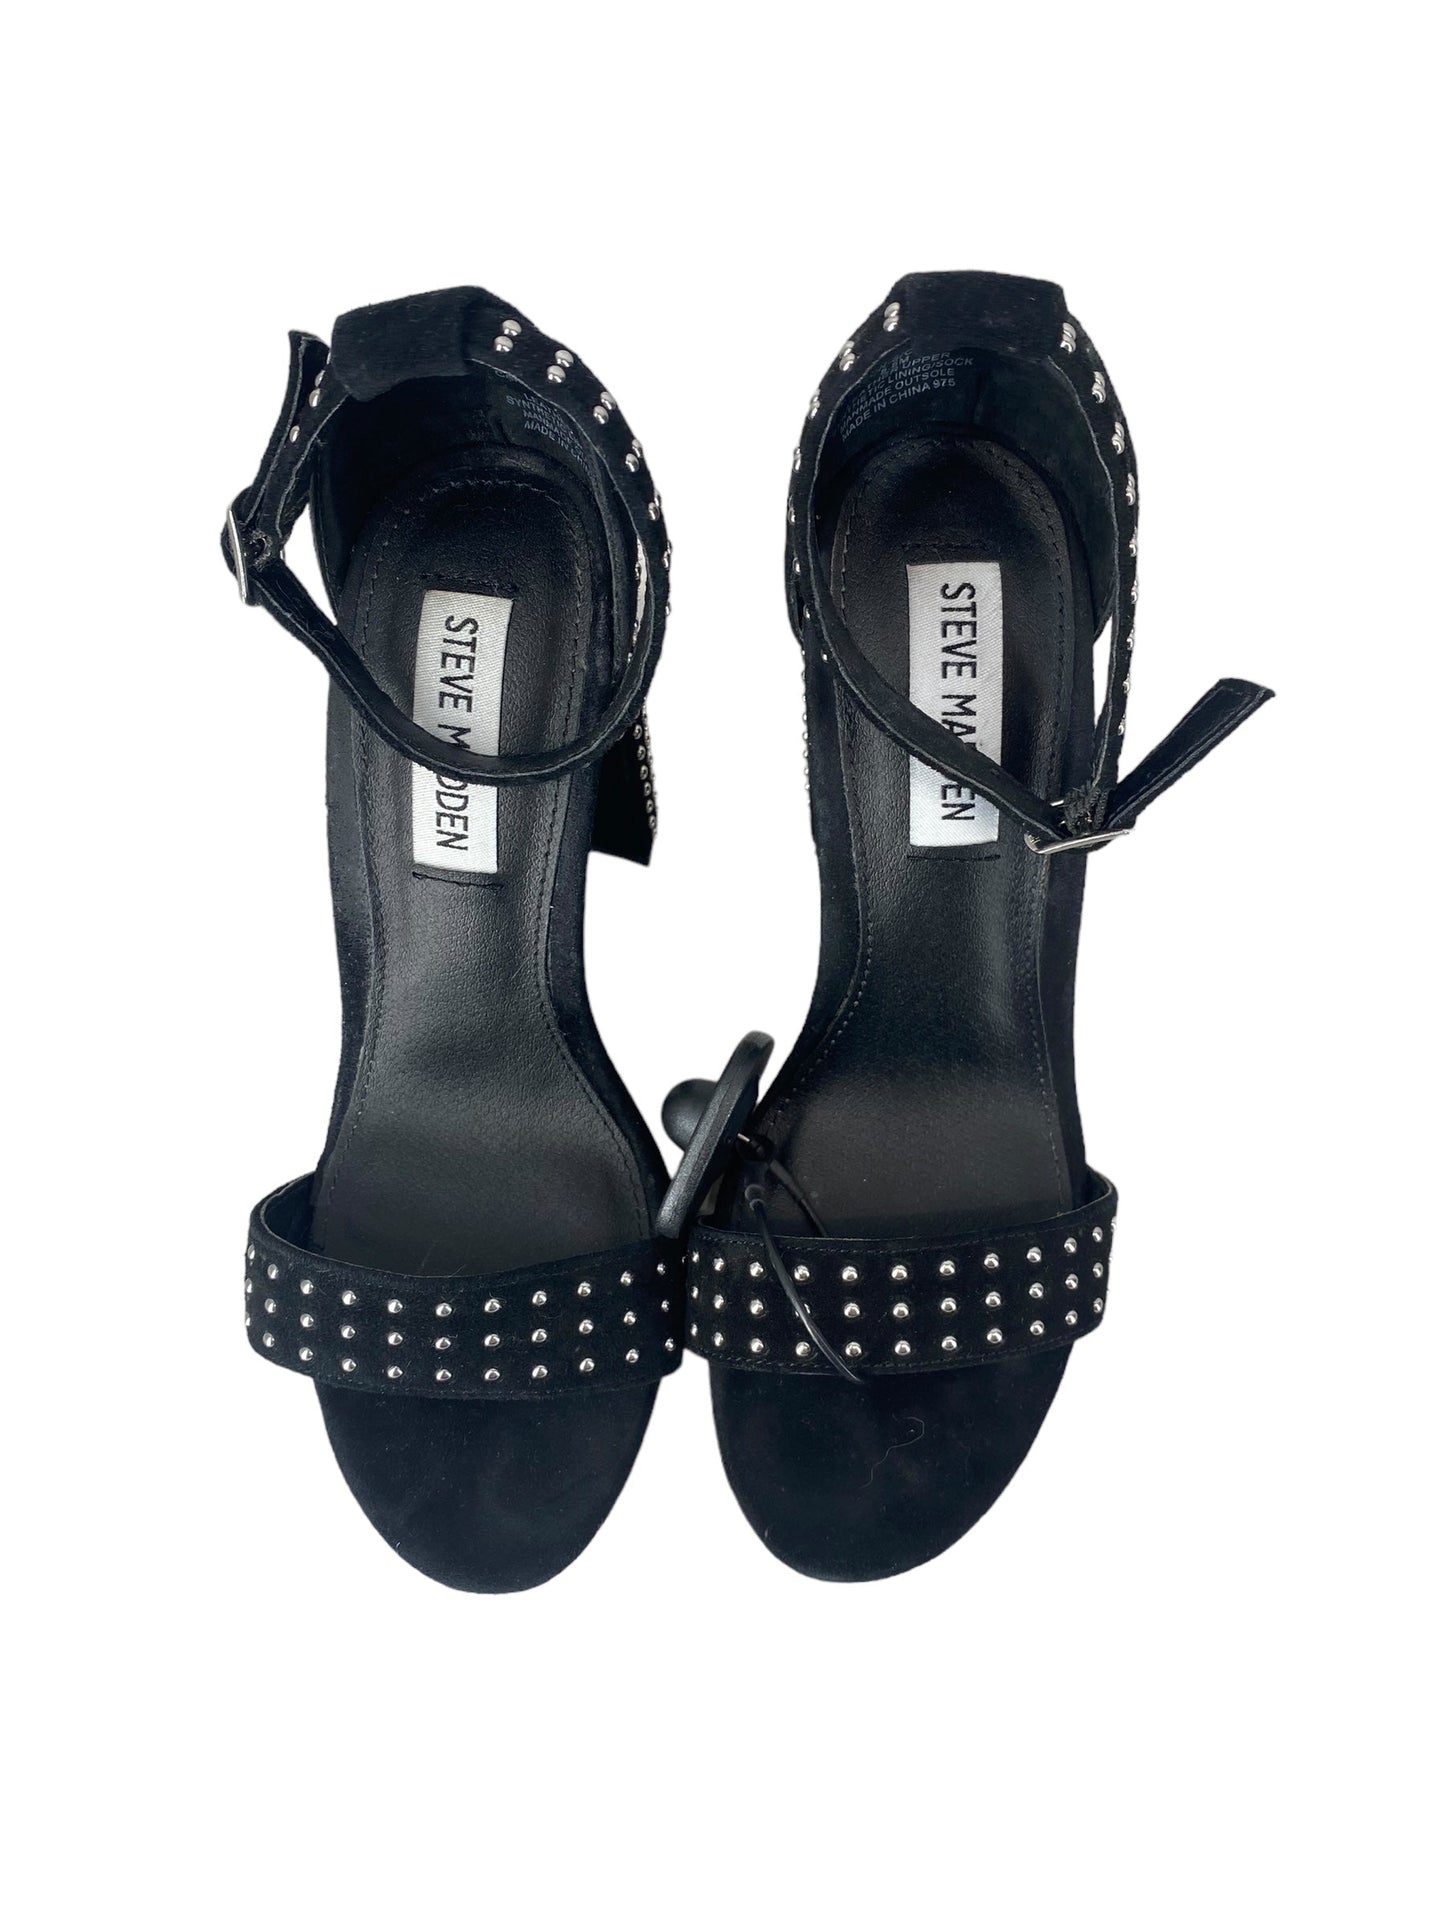 Black Shoes Heels Block Steve Madden, Size 5.5